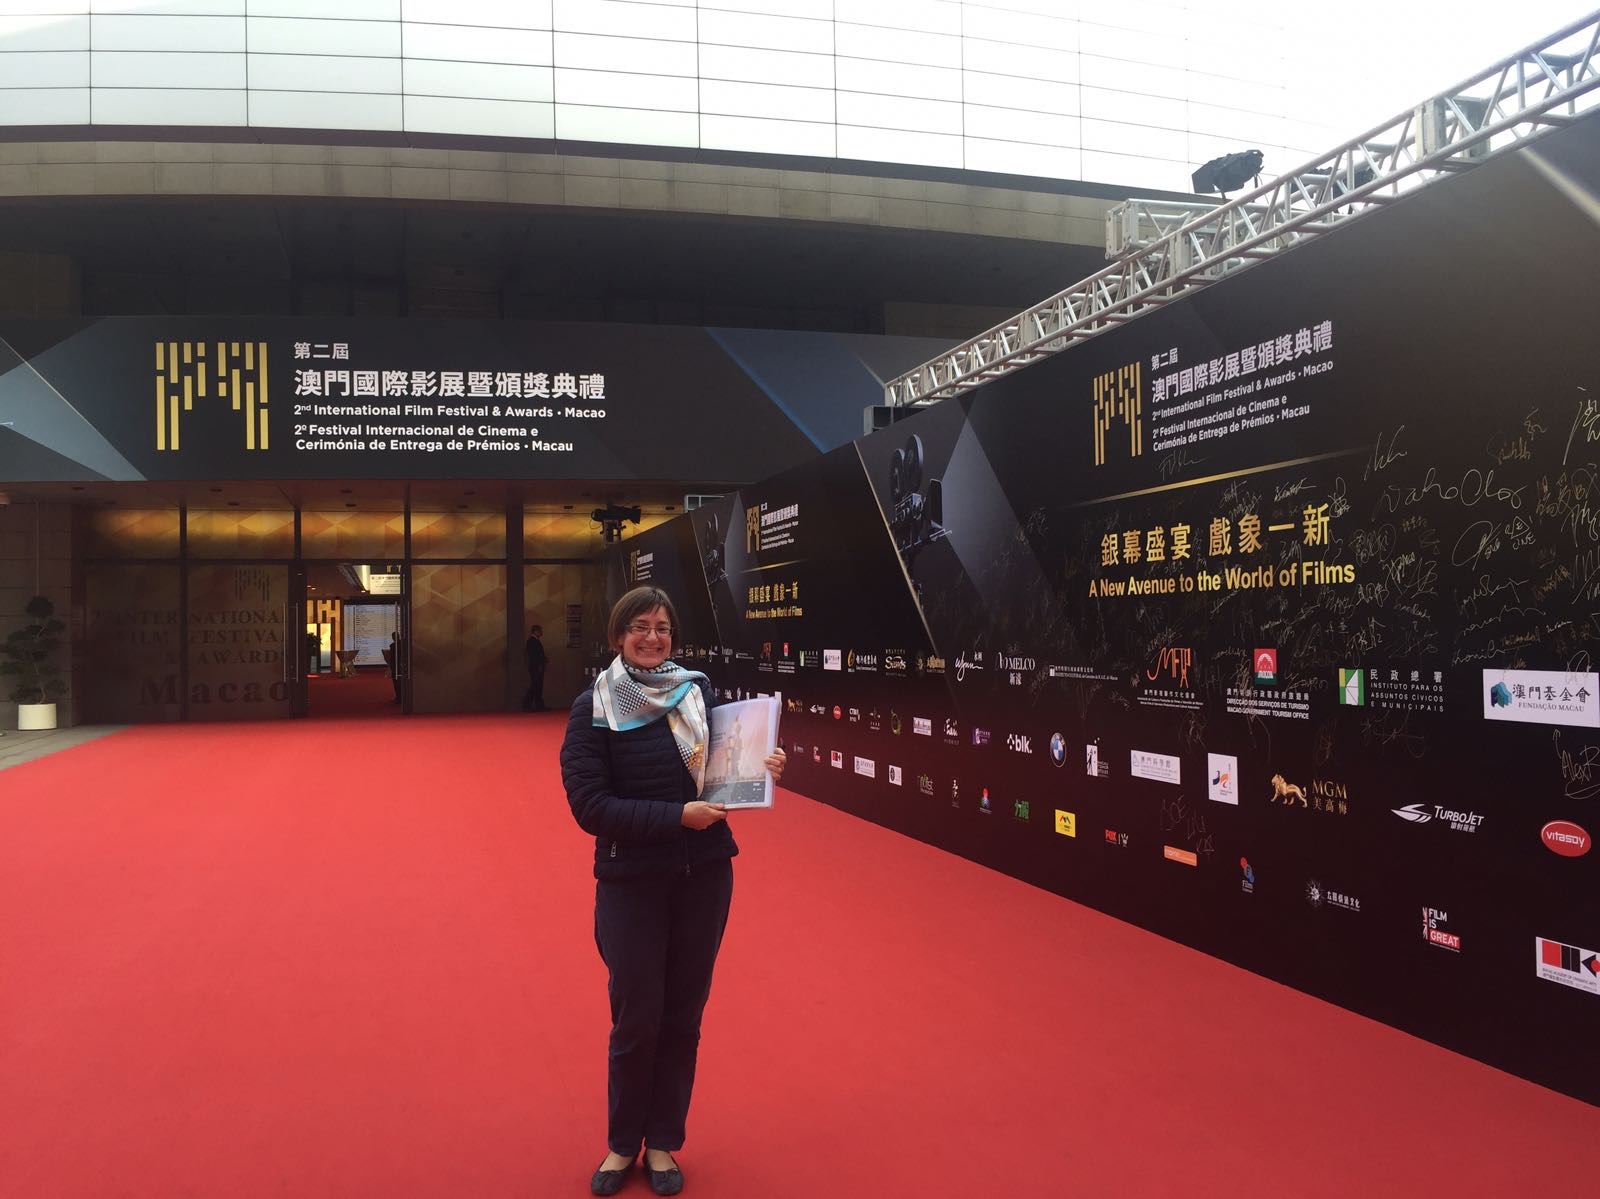 2nd International Film Festival&Awards Macao